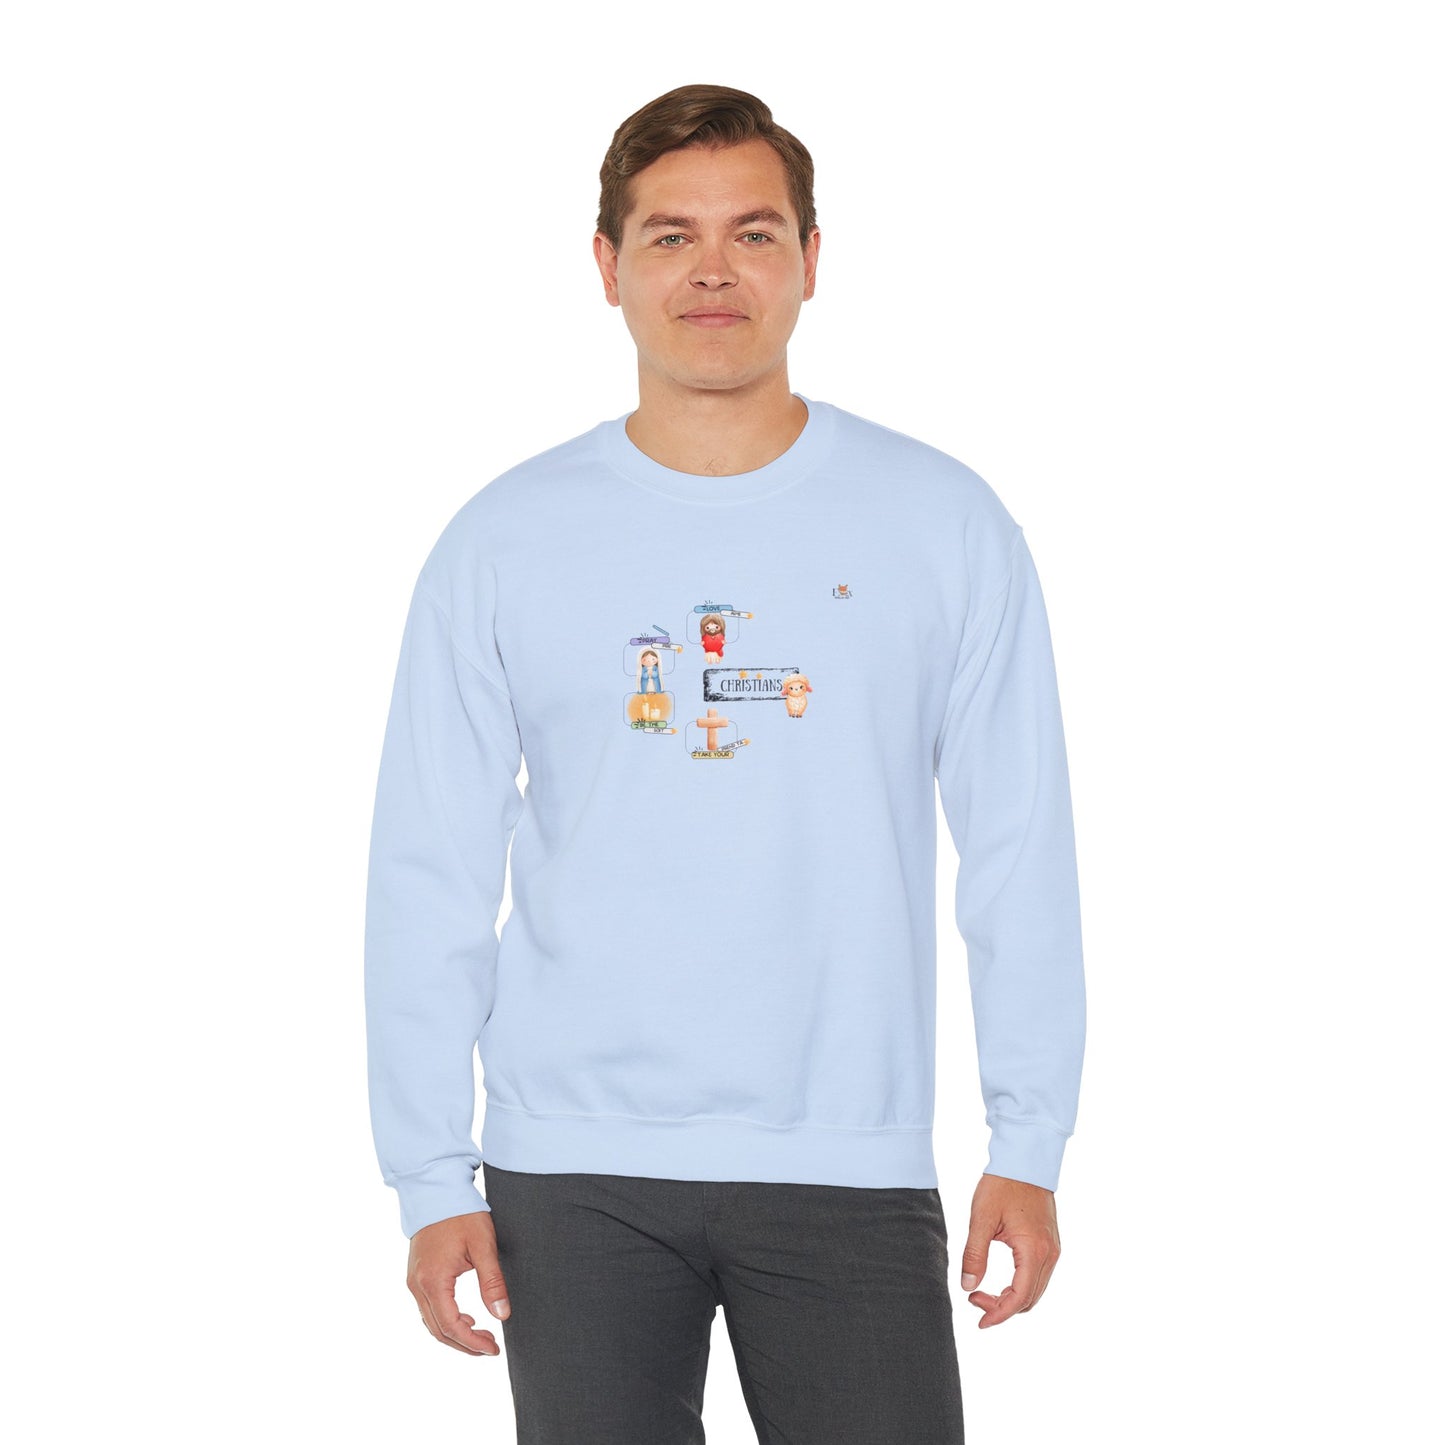 Christian Behavior [Lamb]-Bilingual [Eng-Fr]- Unisex Crewneck Sweatshirt